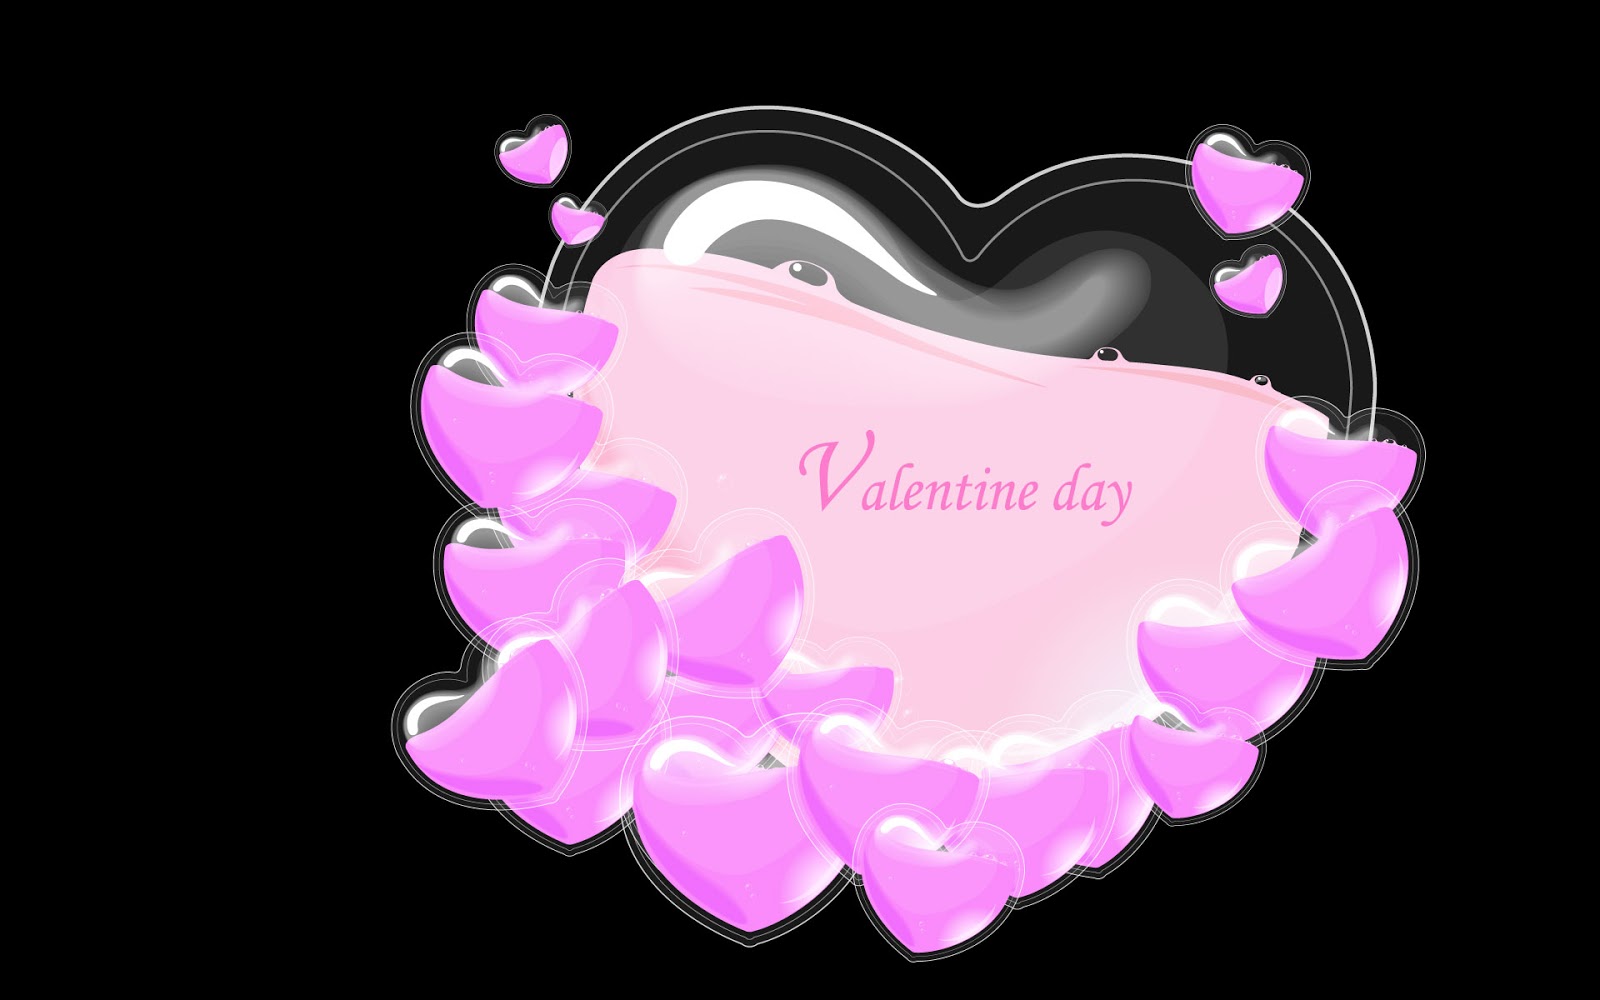 11. Valentines Day Desktop Backgrounds Hd Wallpapers 2014